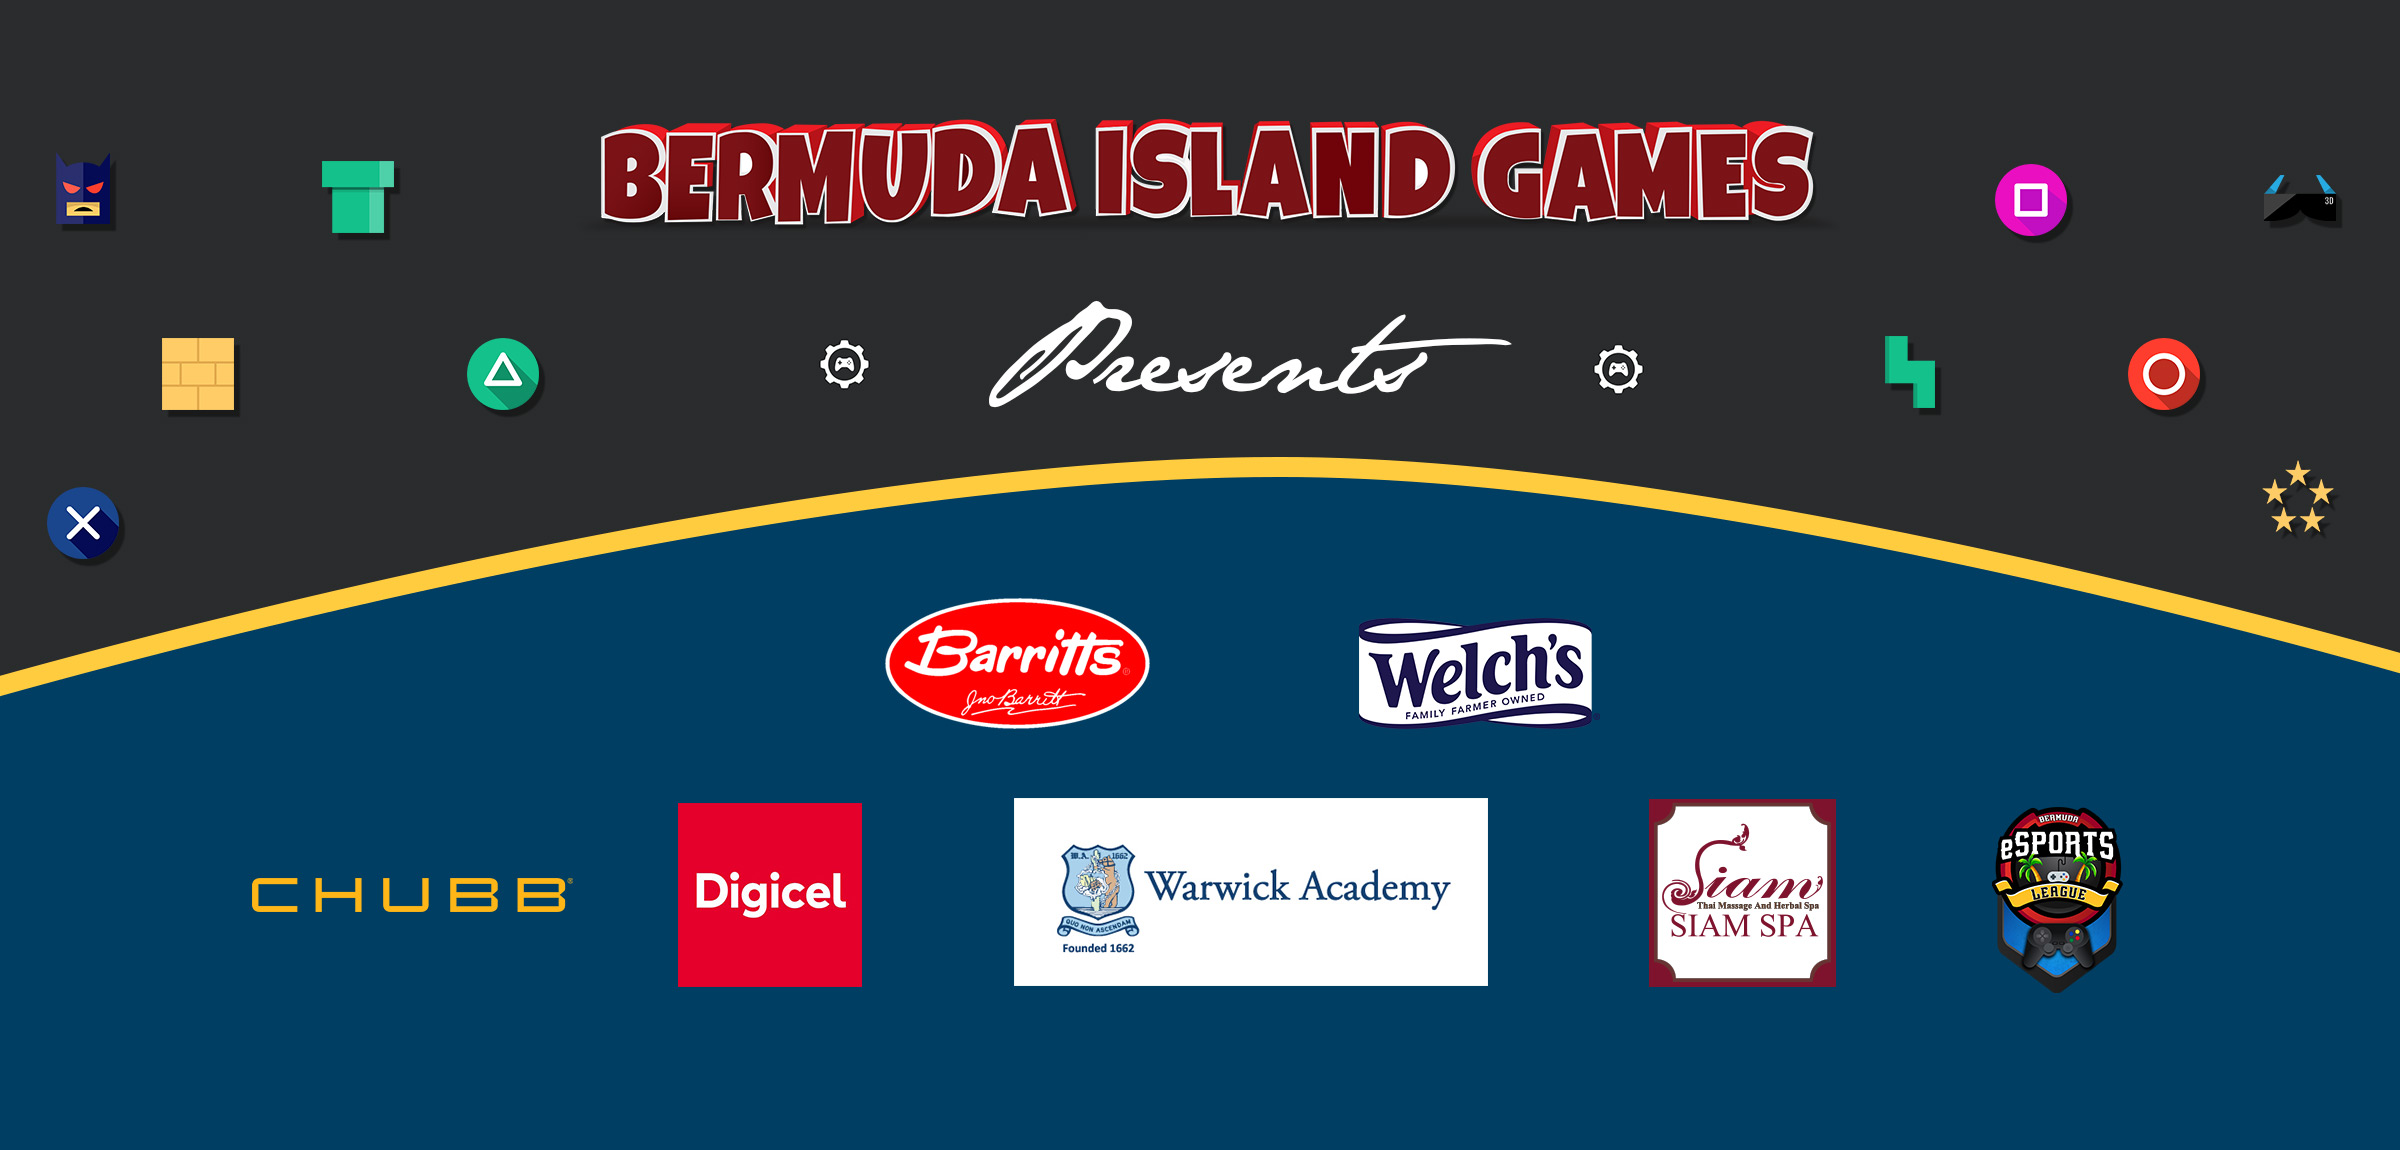 Bermuda Island Games is the first Bermudian mobile game development